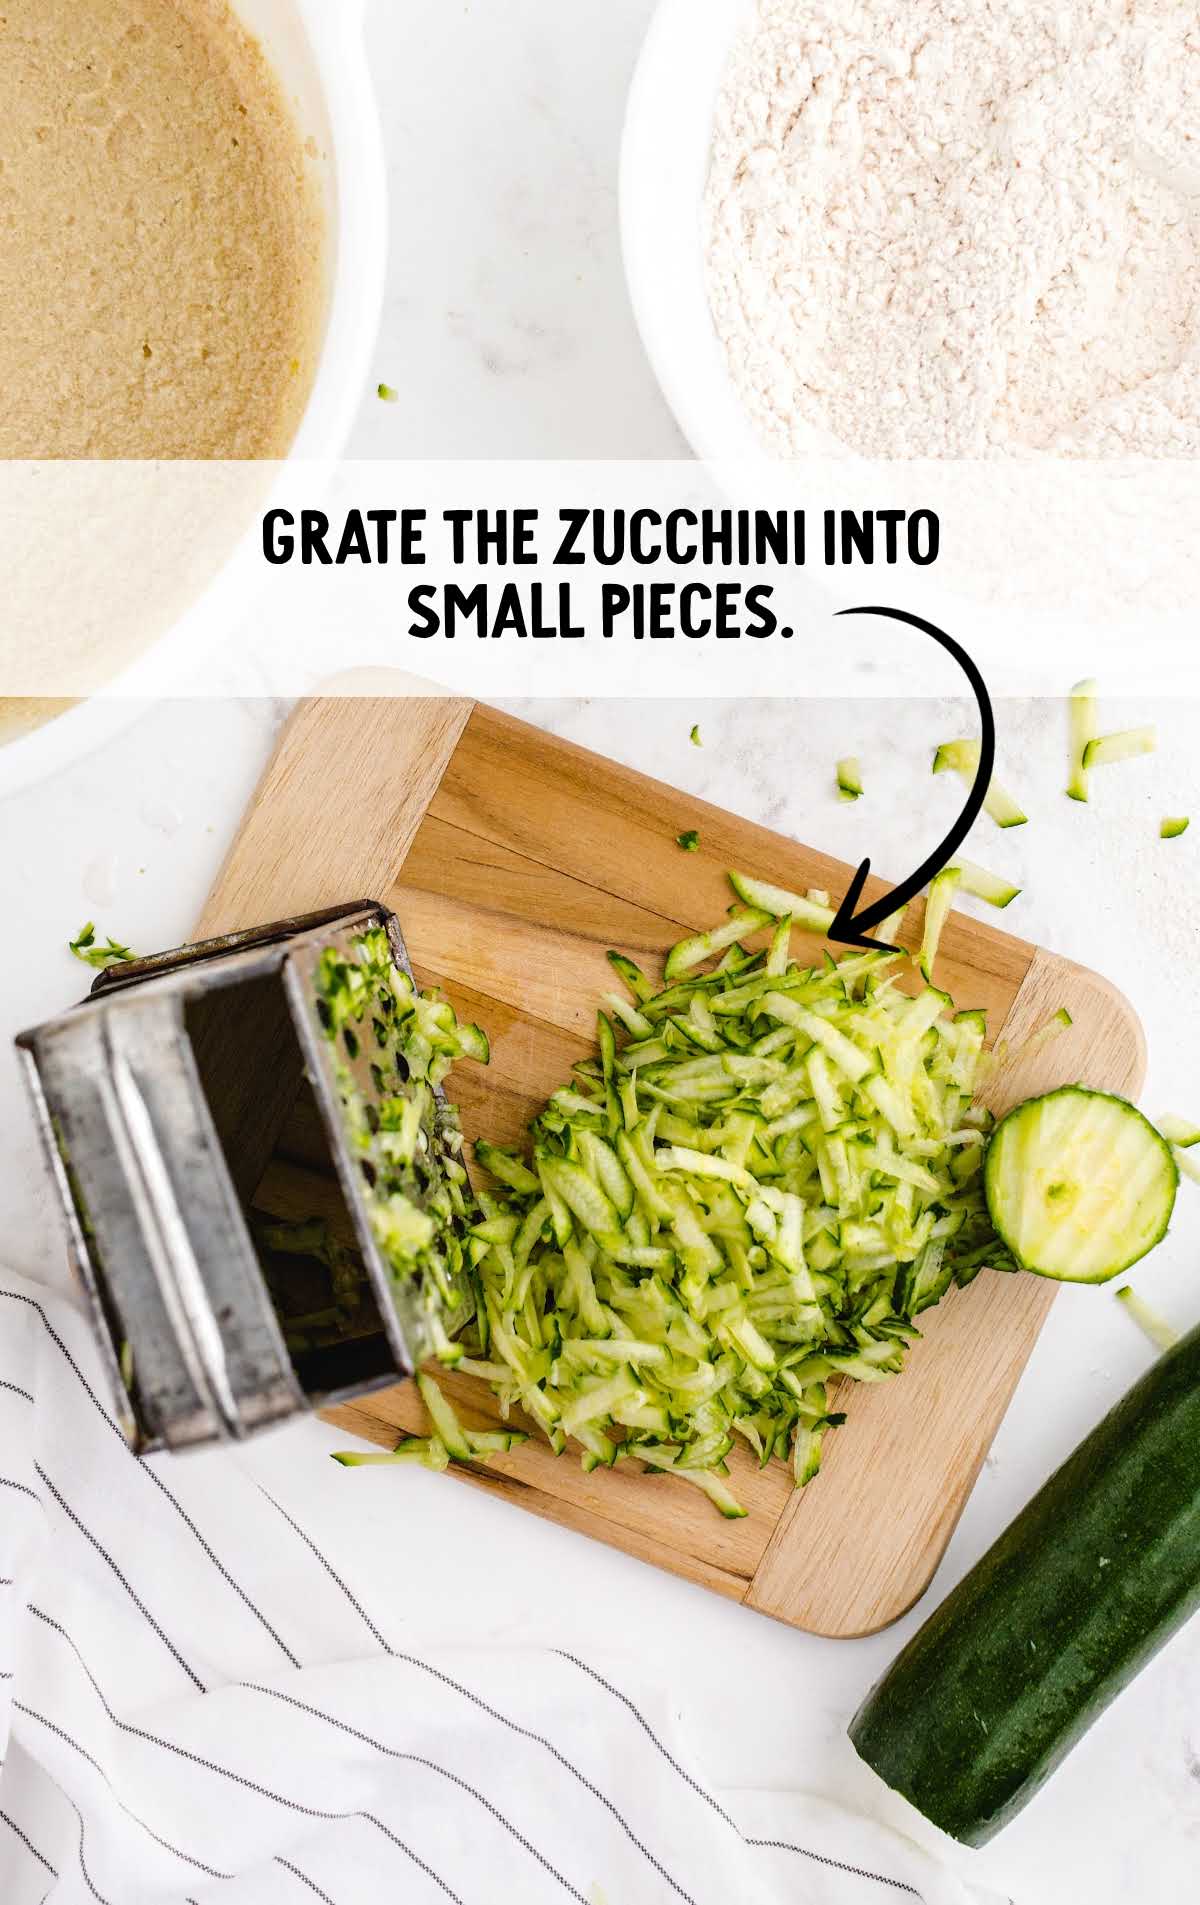 zucchini bread process shot of zucchini grated into small pieces on a wooden board